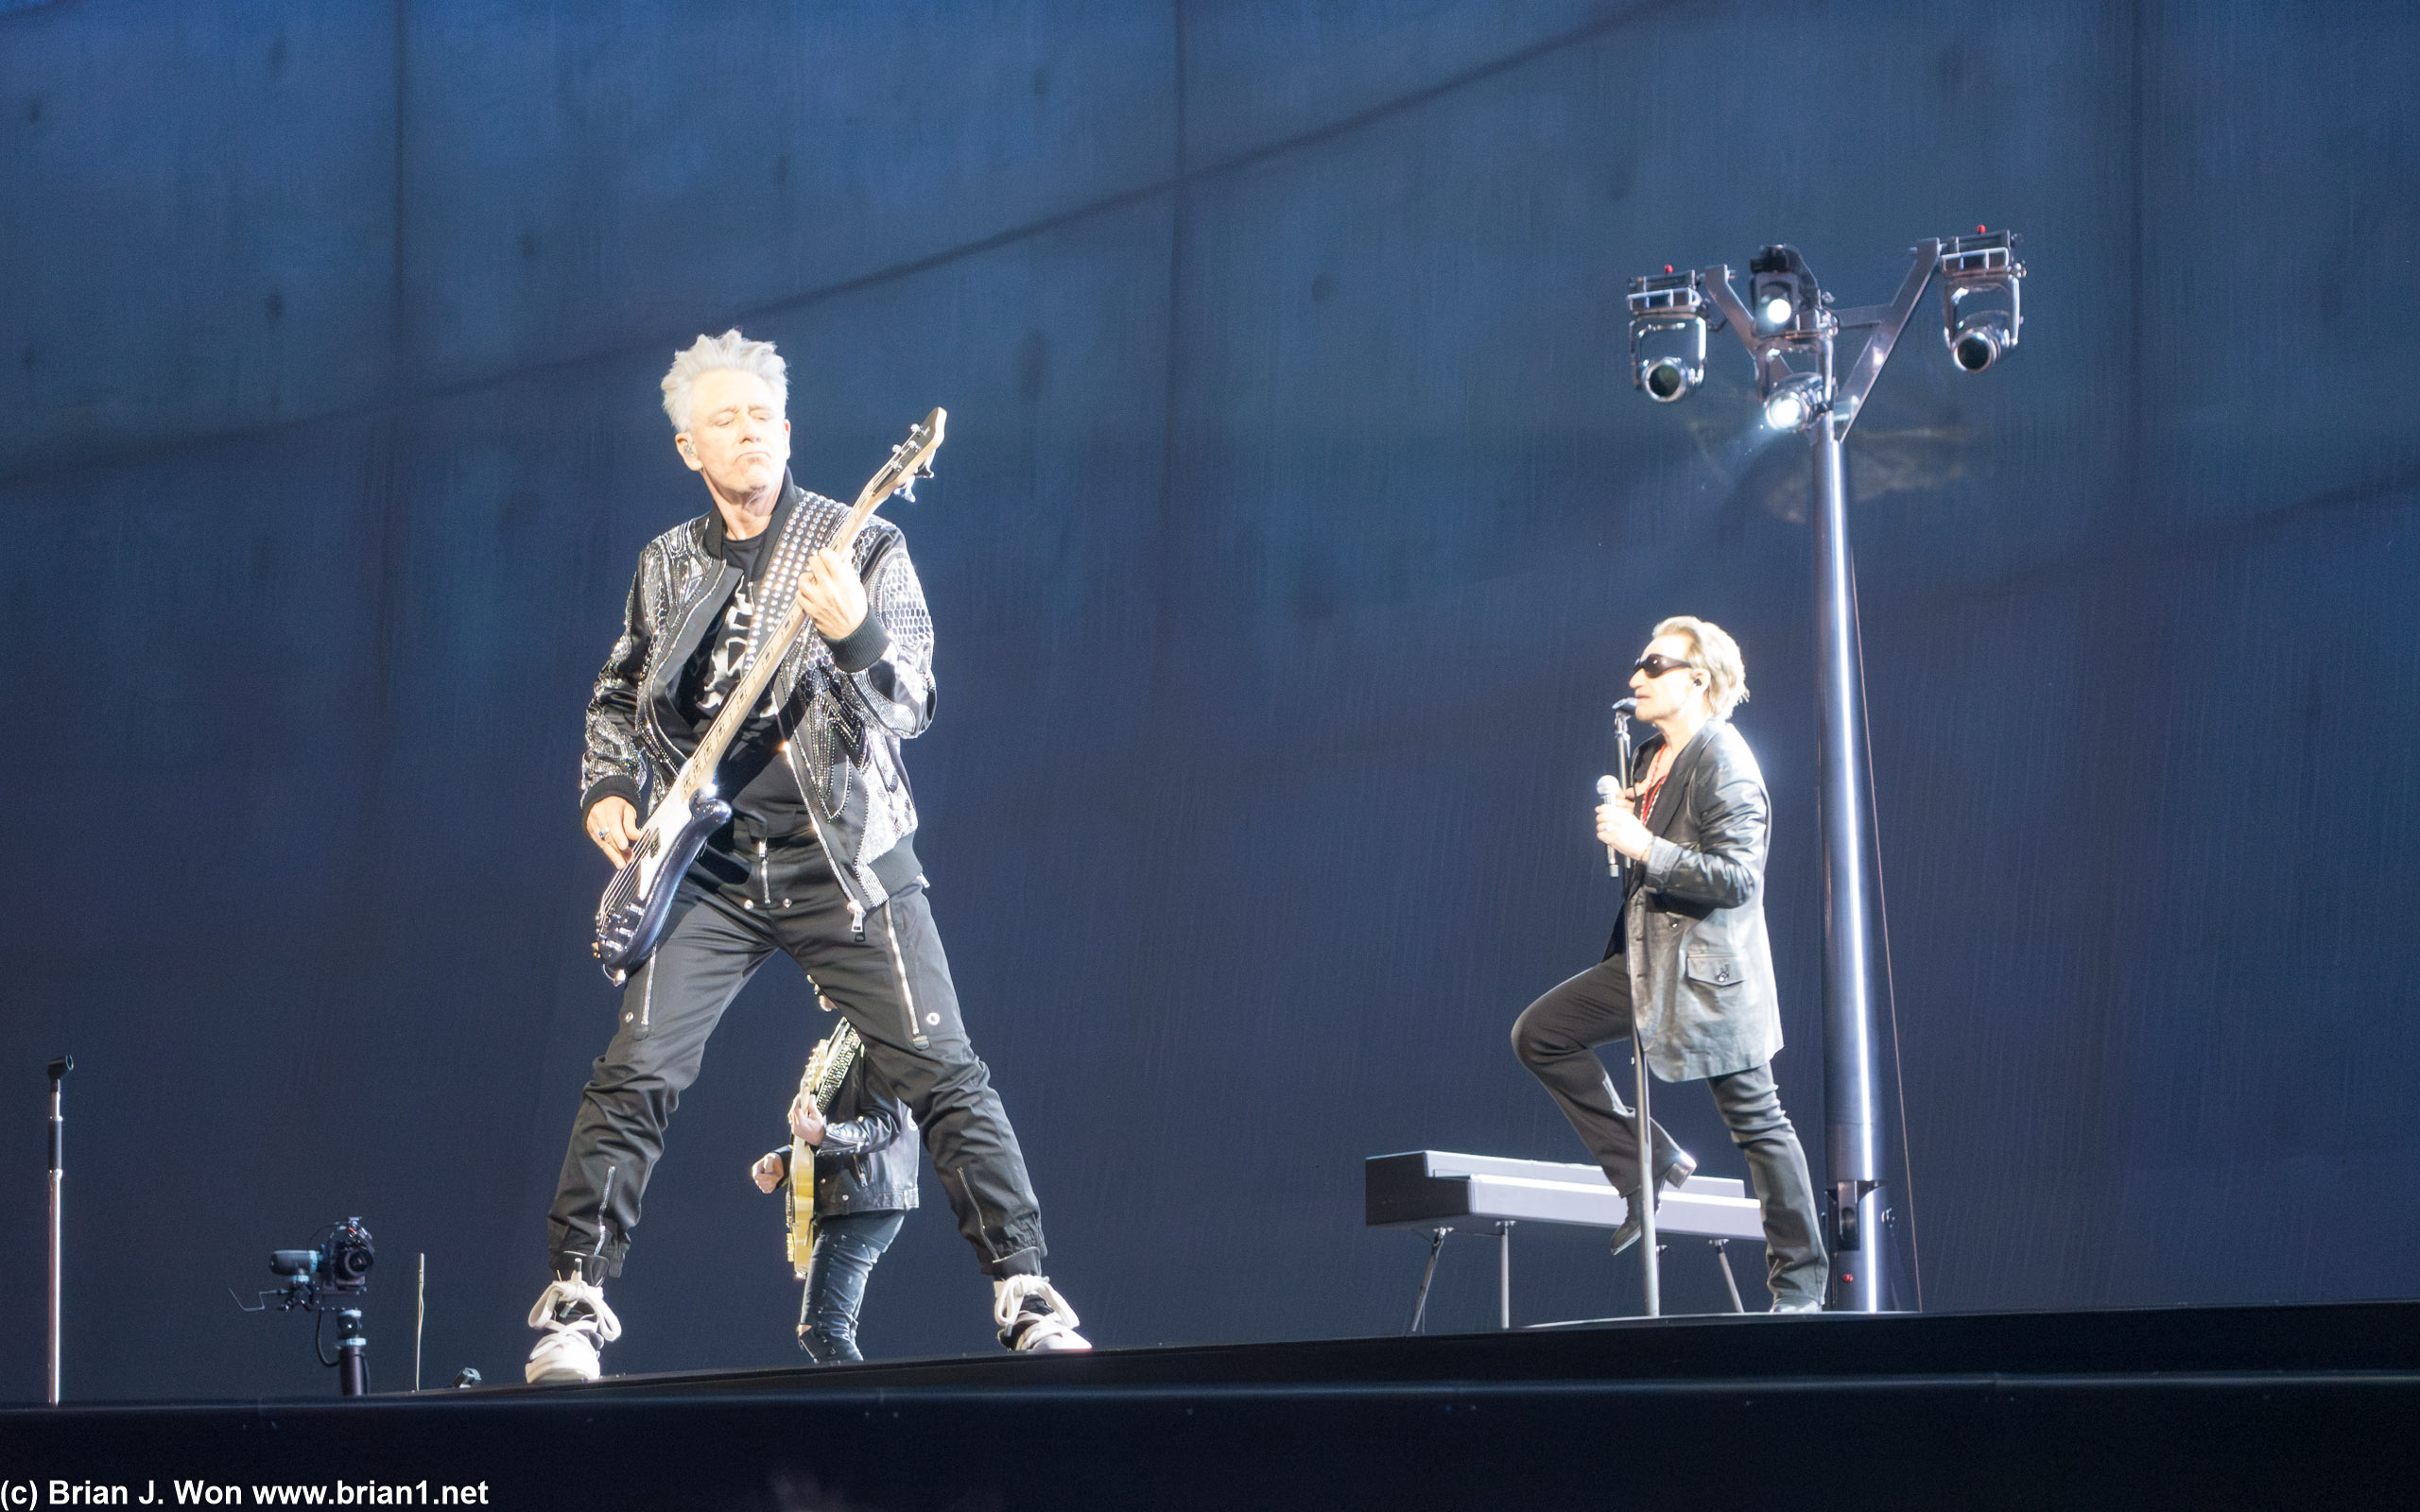 Adam on guitar, Bono in the background.